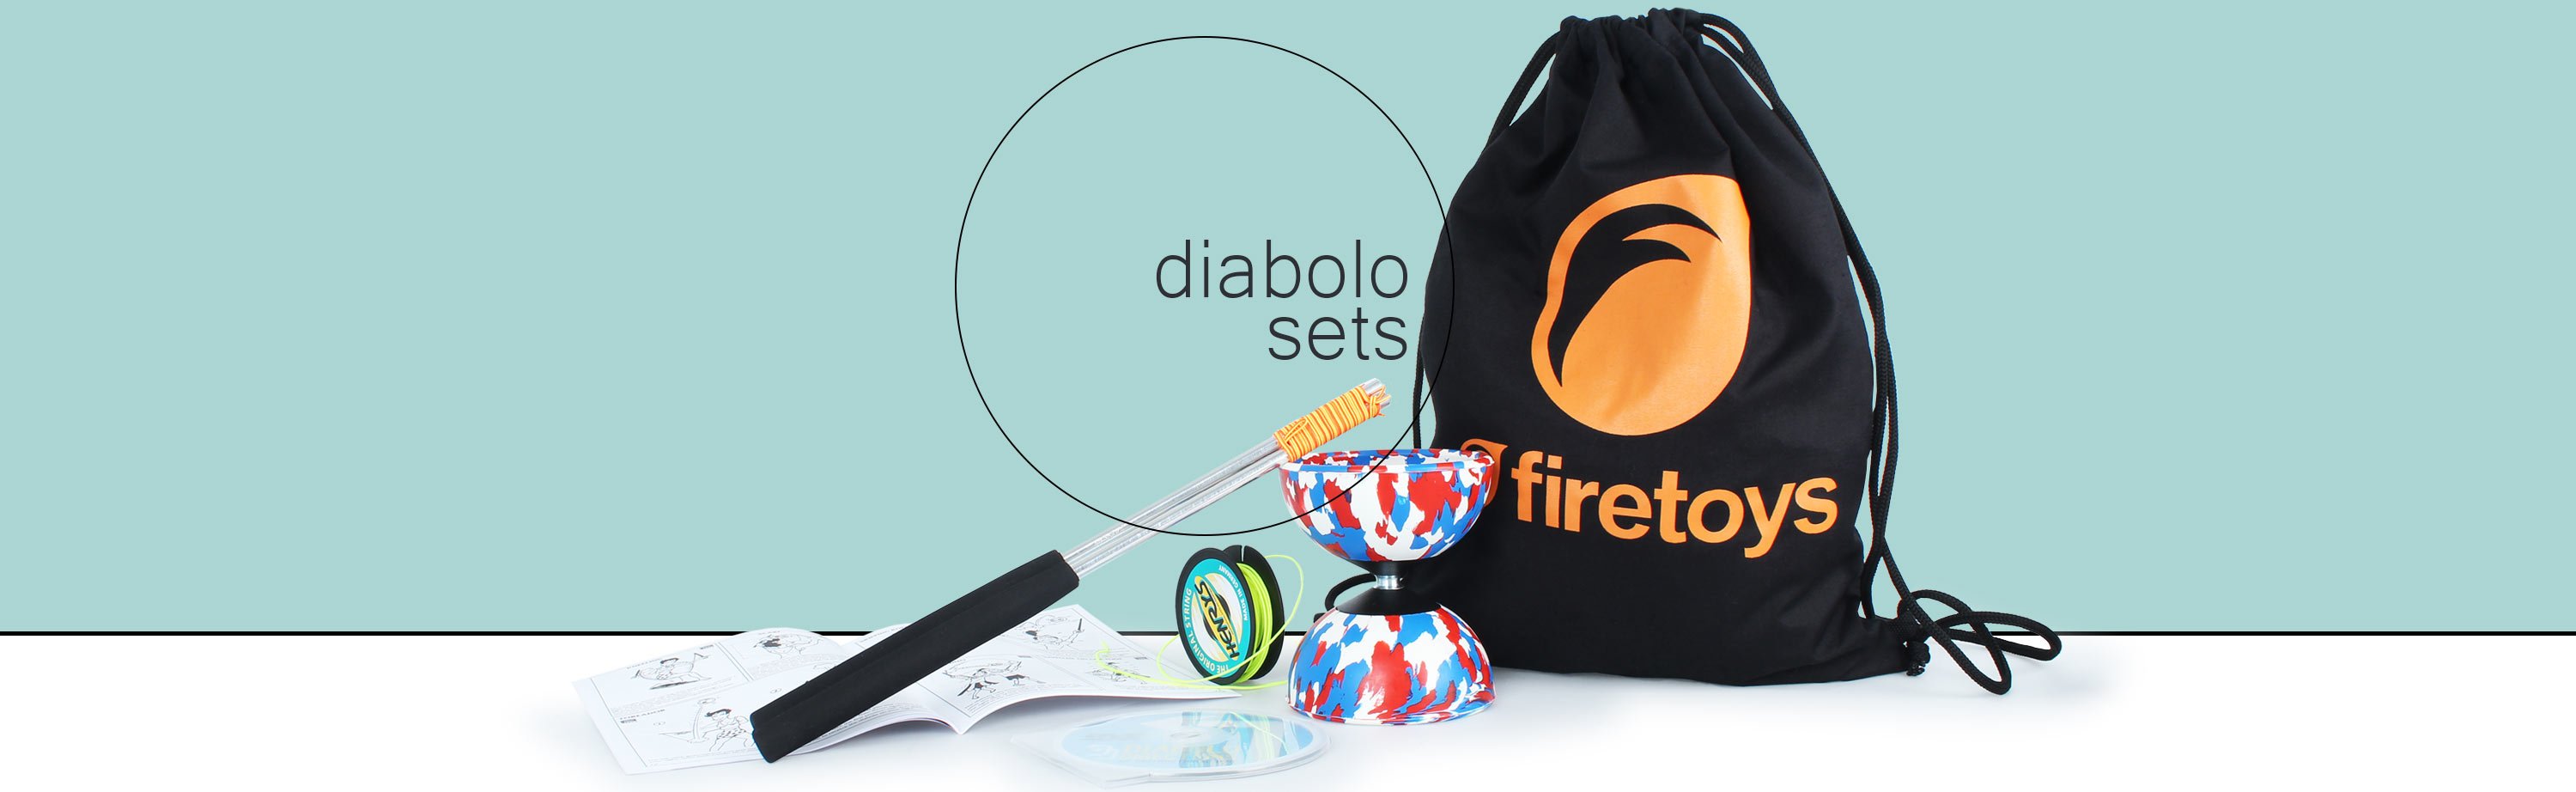 Juggle Dream Cyclone Quartz 2 Triple Bearing Diabolo /& Superglass Diablo Sticks Set with Firetoys Bag